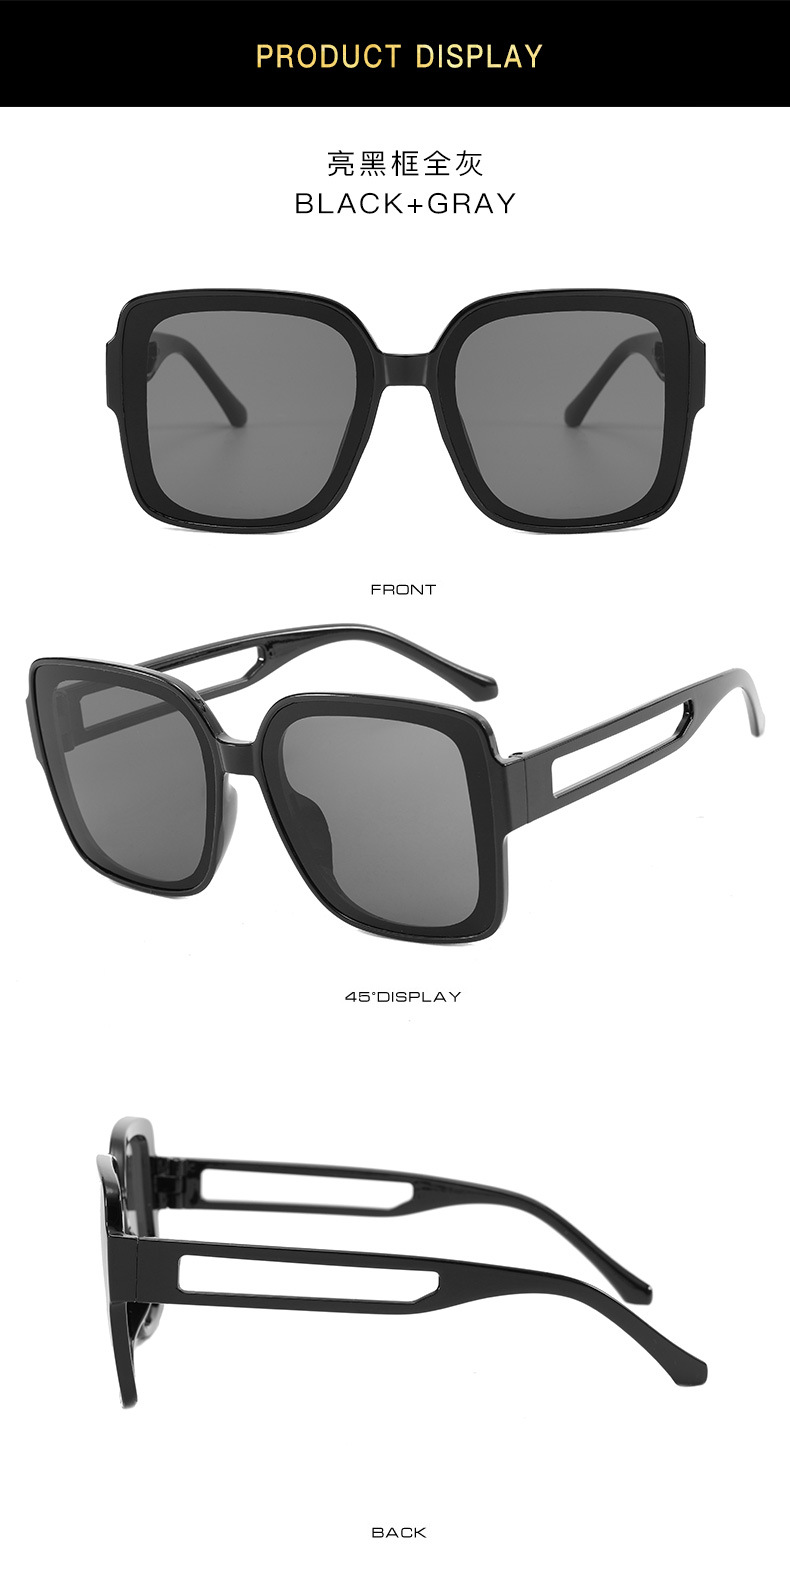 sunglasses (7)